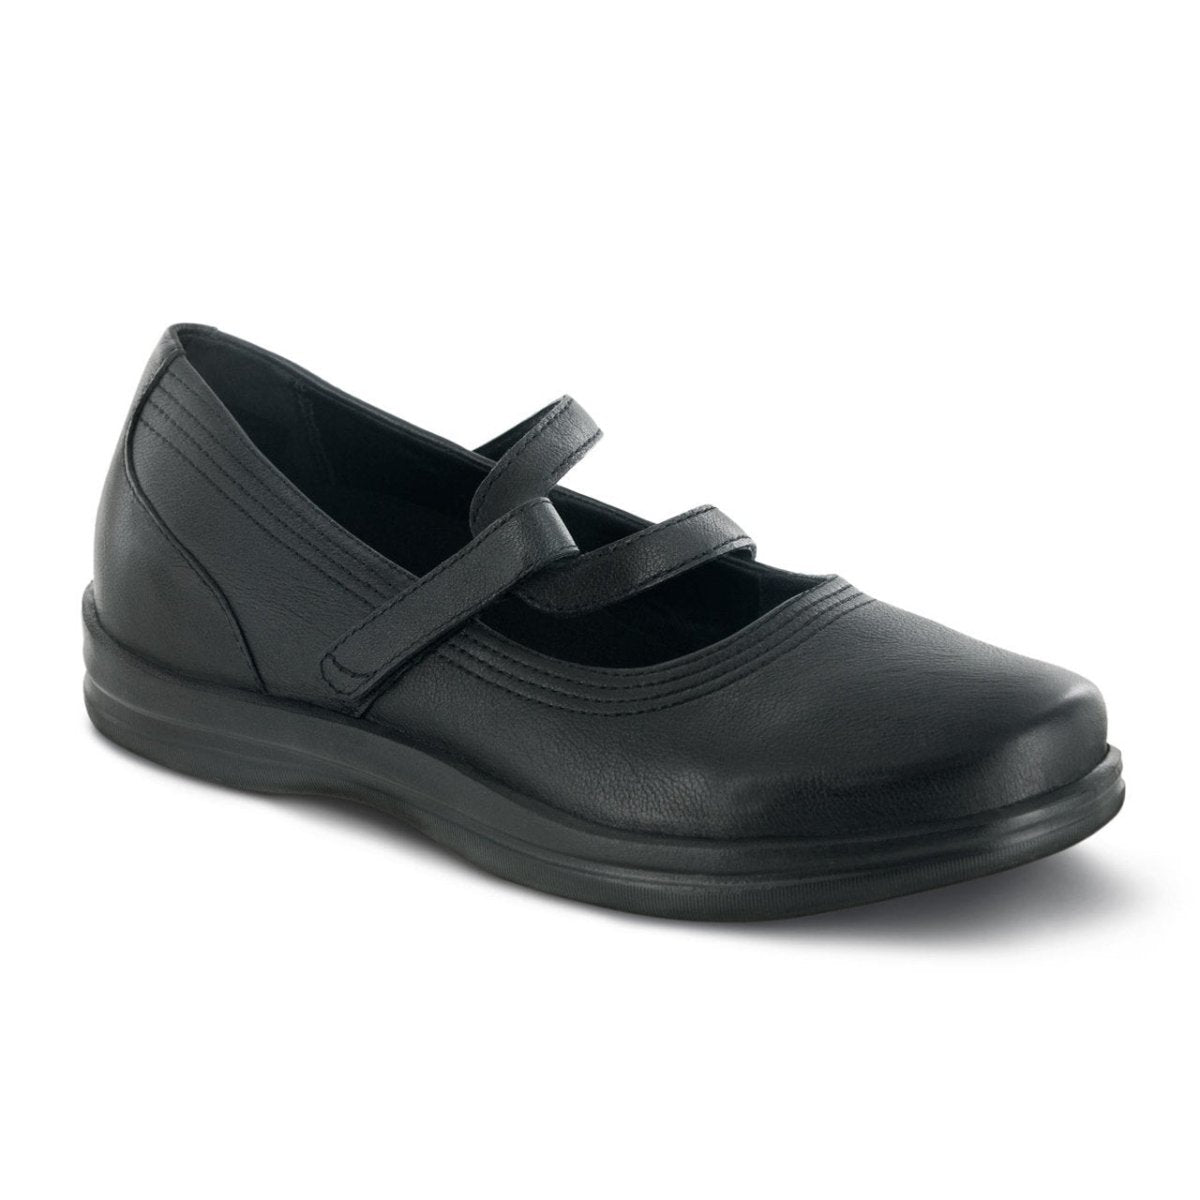 APEX A300W JANICE STRAP MARY JANE WOMEN'S SHOE IN BLACK - TLW Shoes